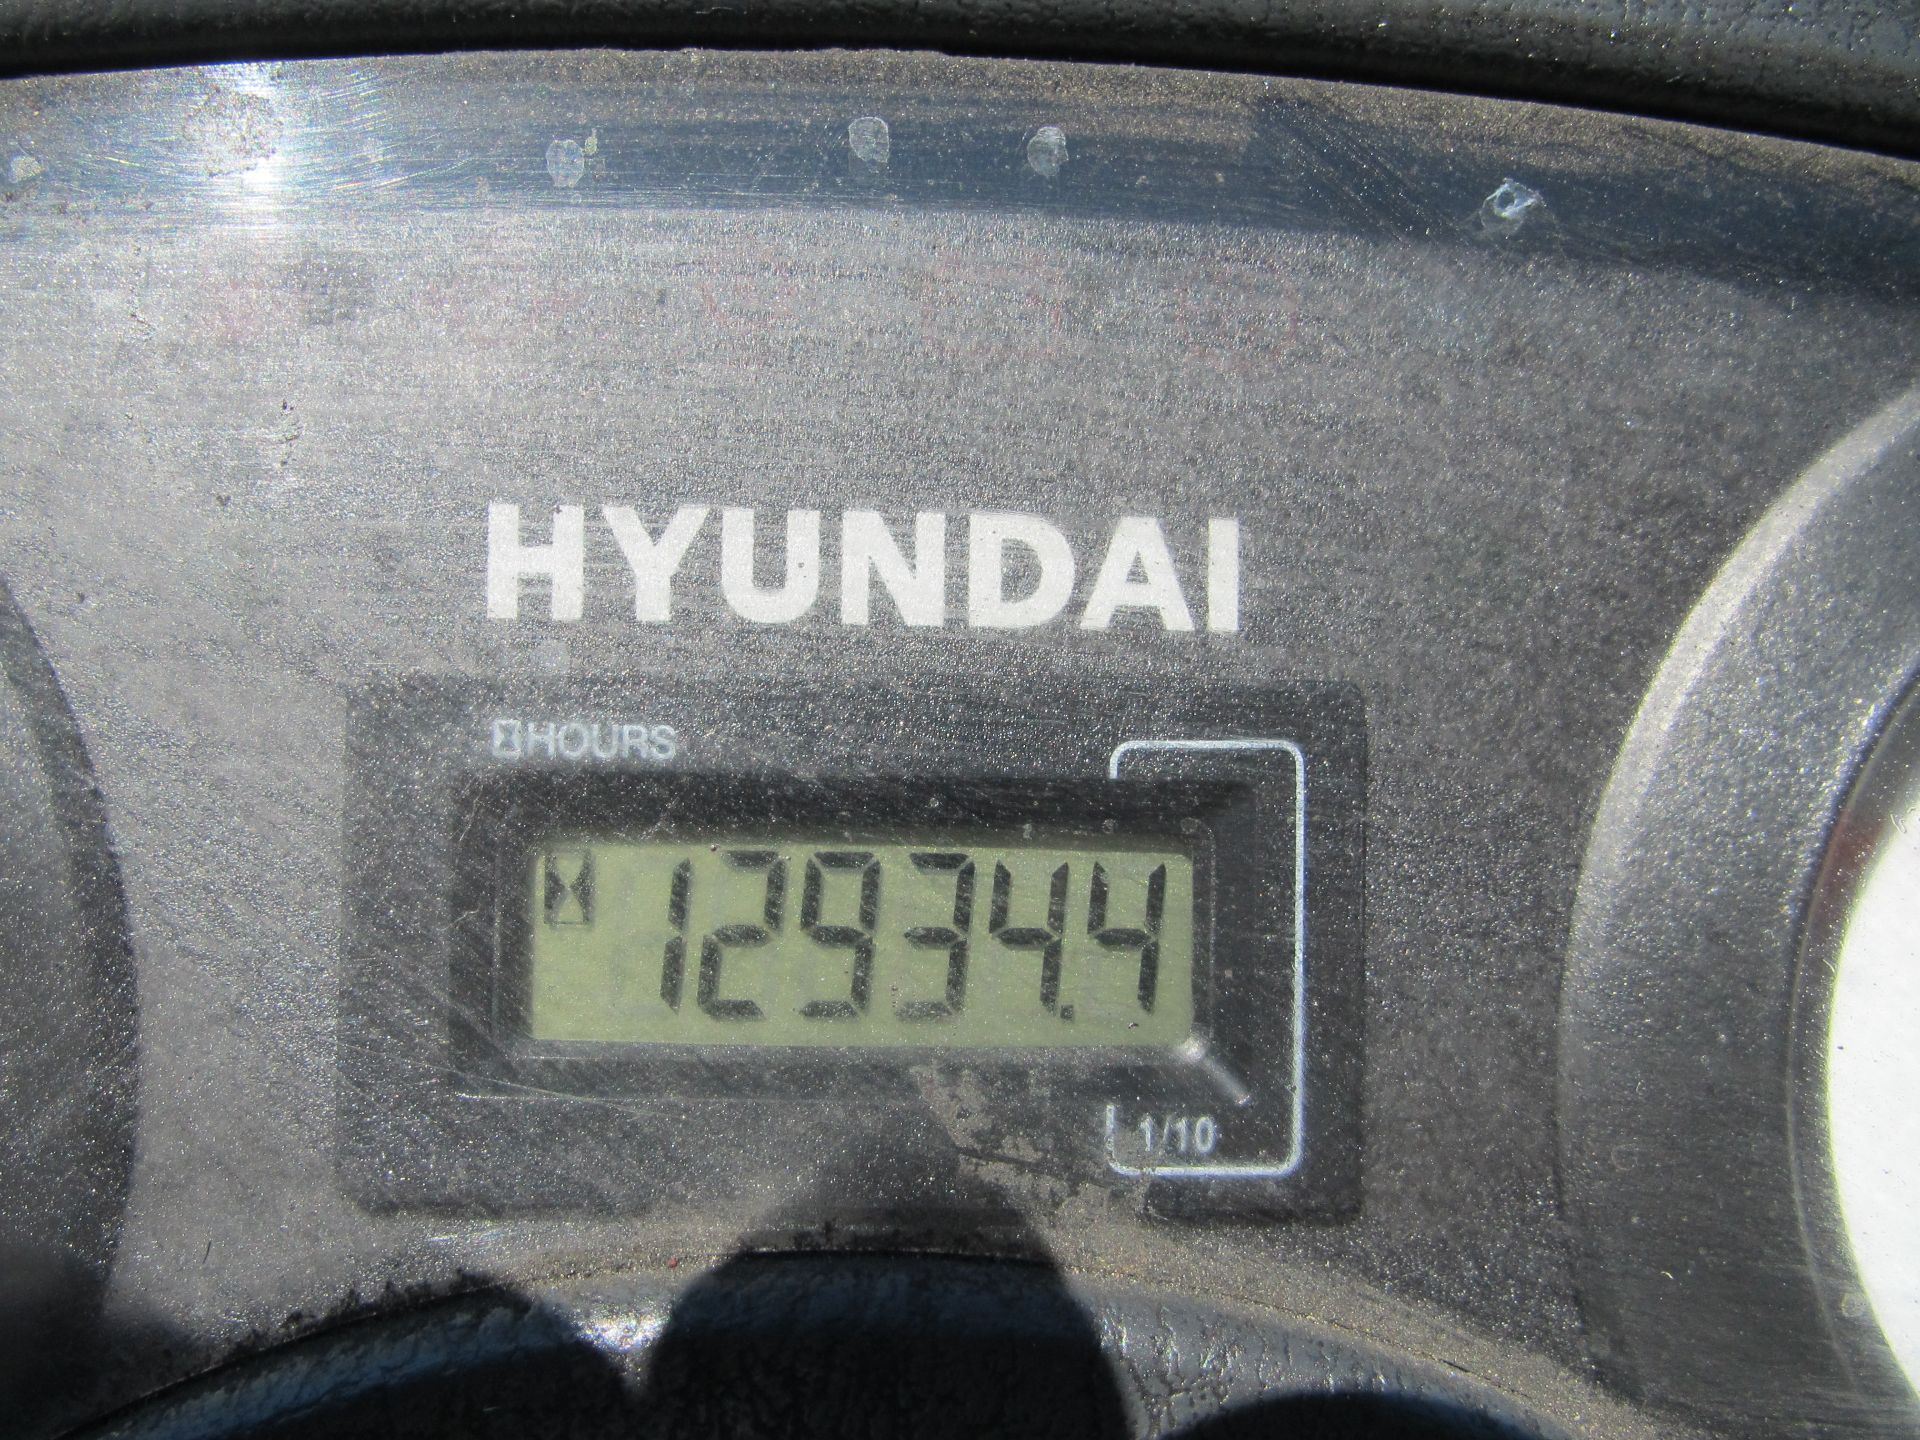 Hyundai 25L-7A 5,000lb Forklift - Image 9 of 10